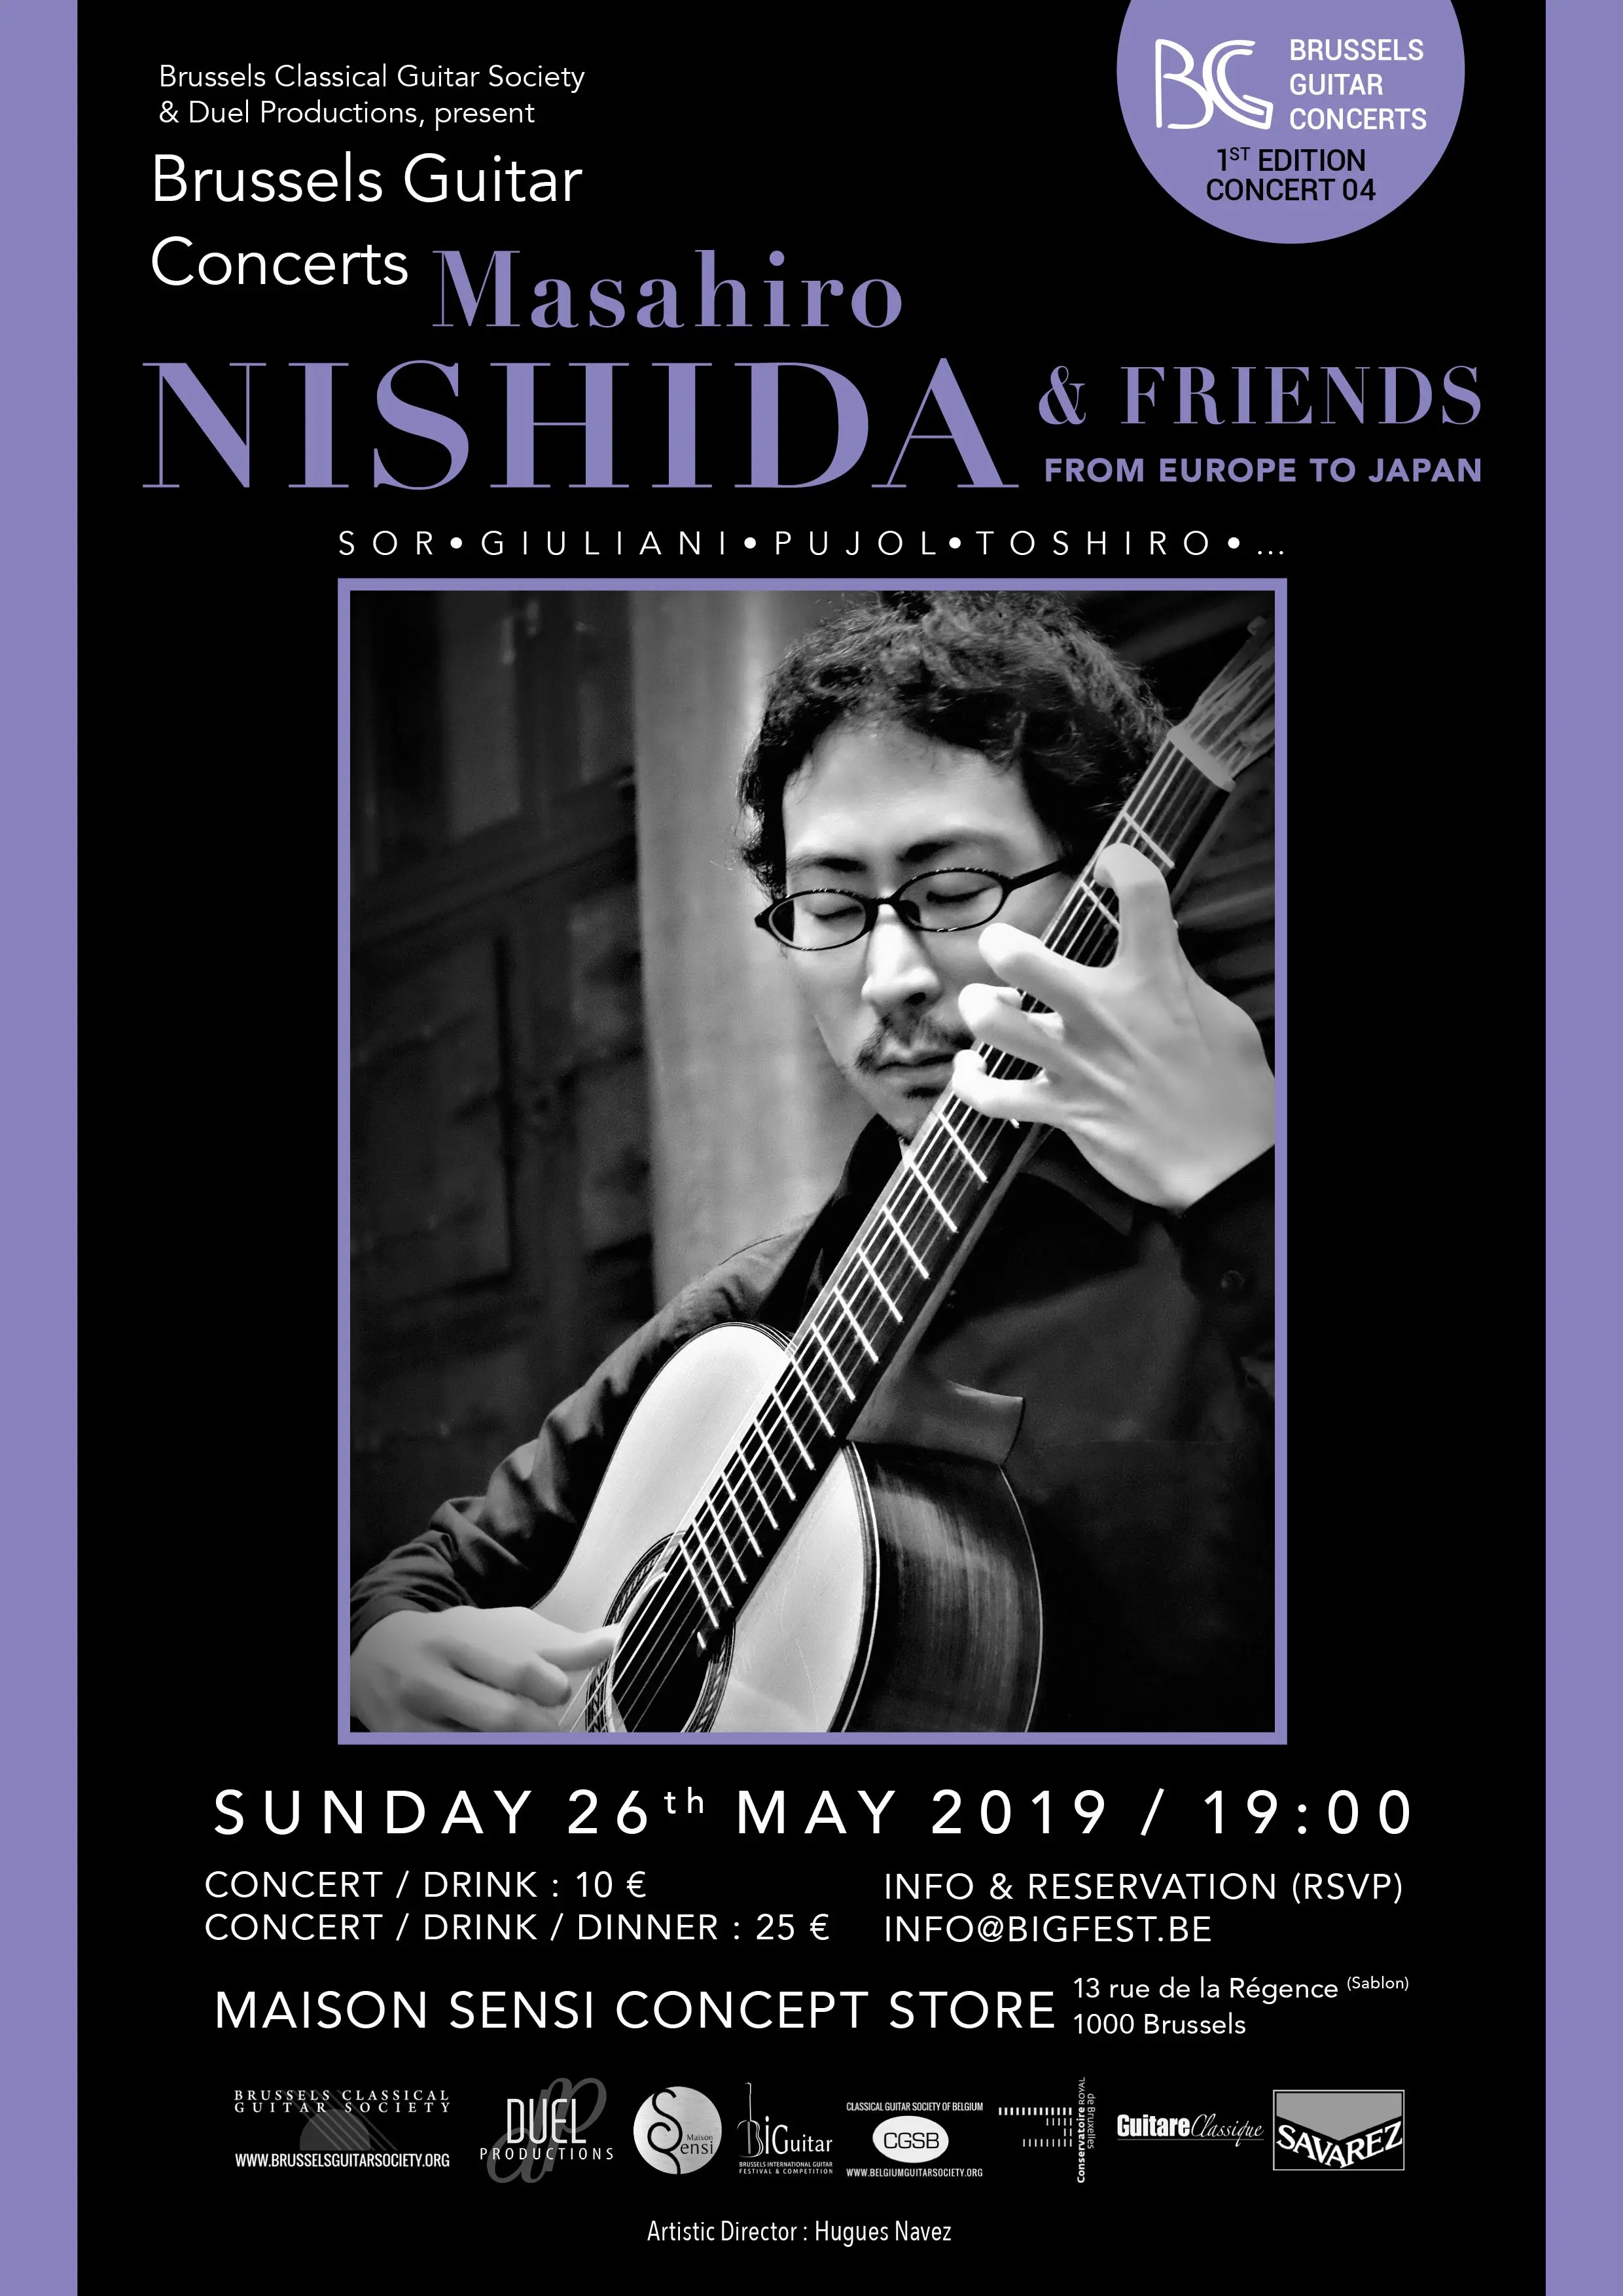 Masahiro Nishida - « From Europe to Japan » - Brussels Guitar Concerts